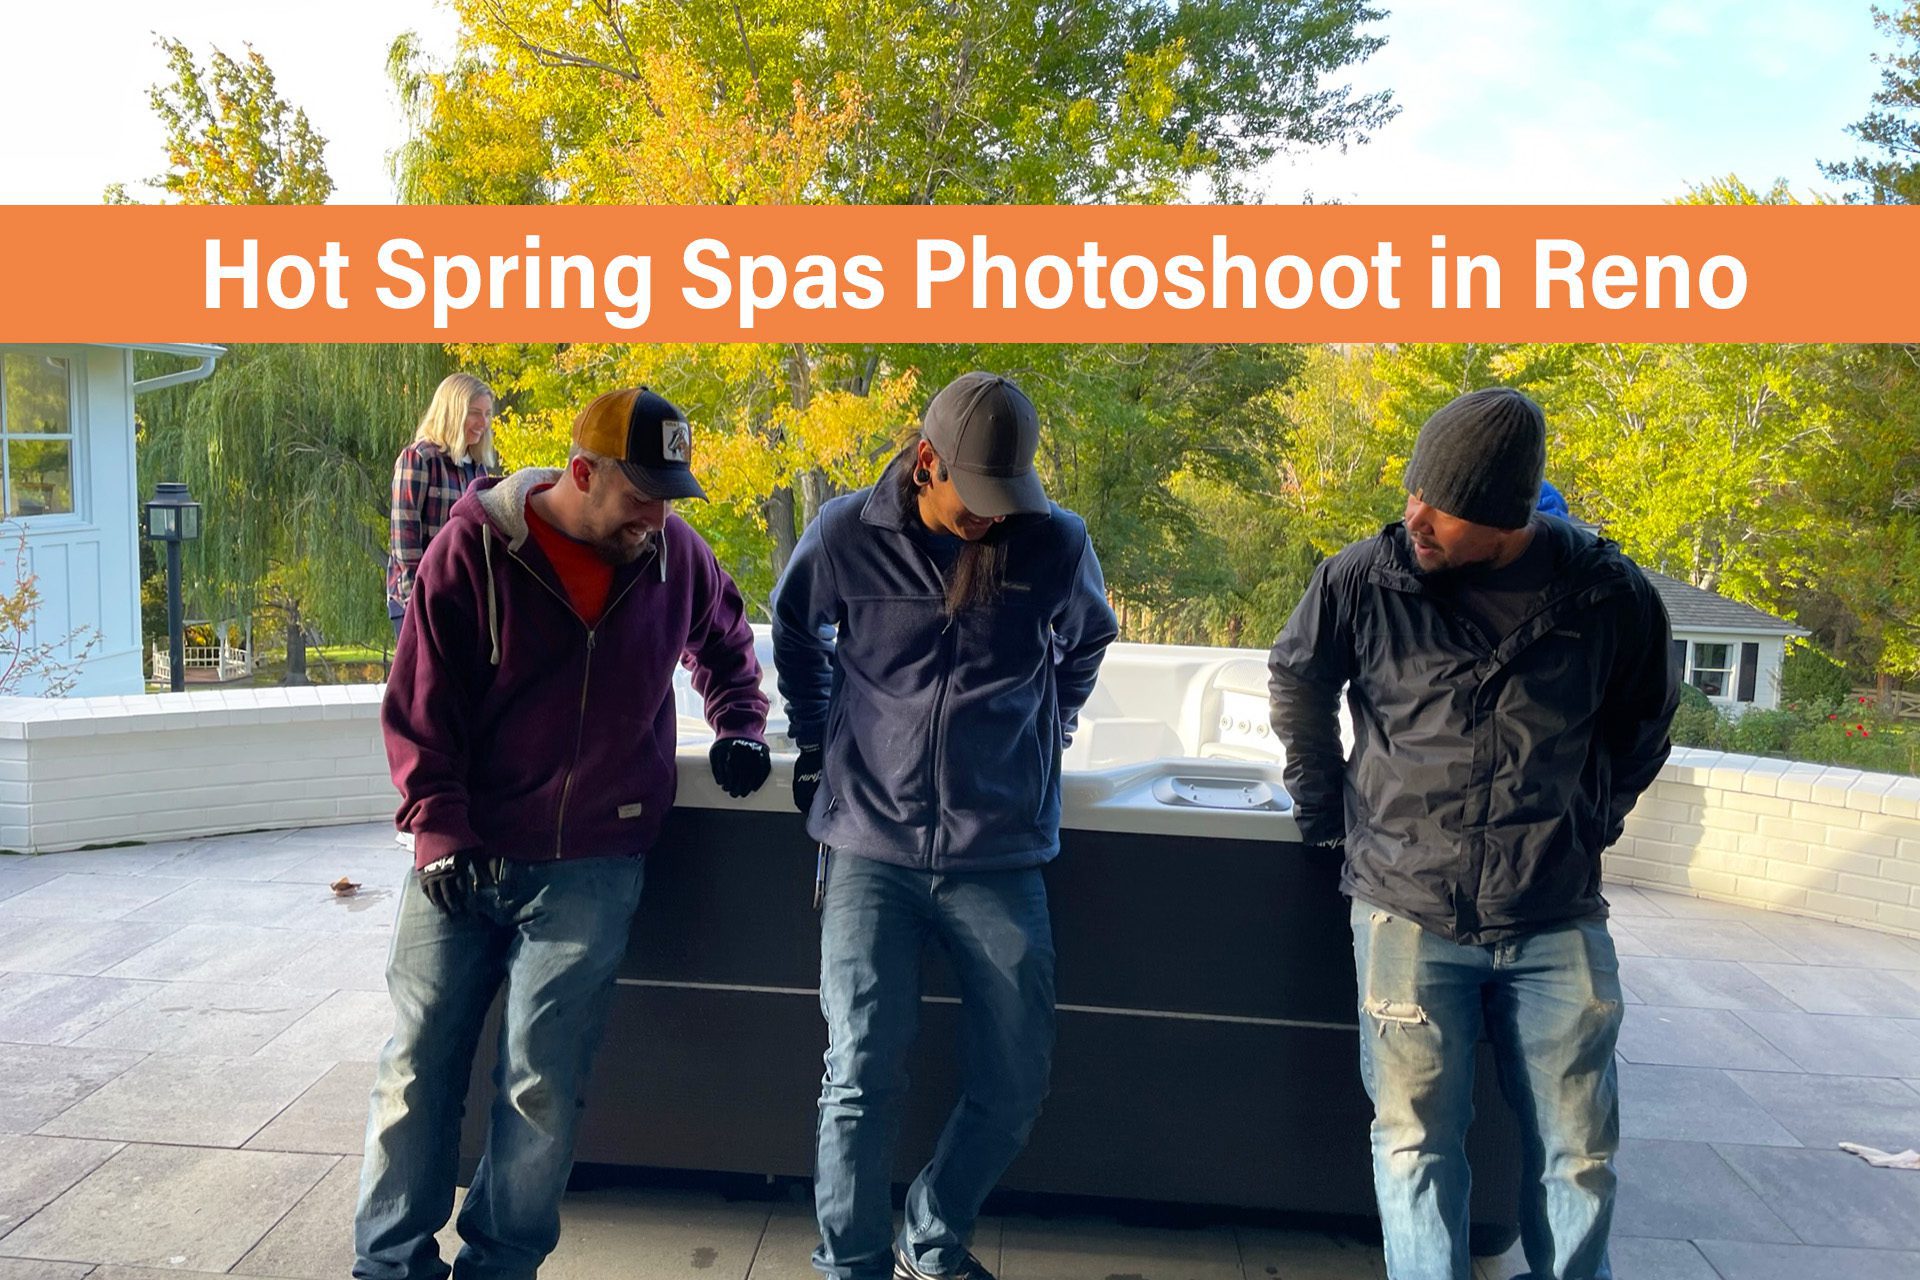 Hot Spring Spas Photoshoot in Reno